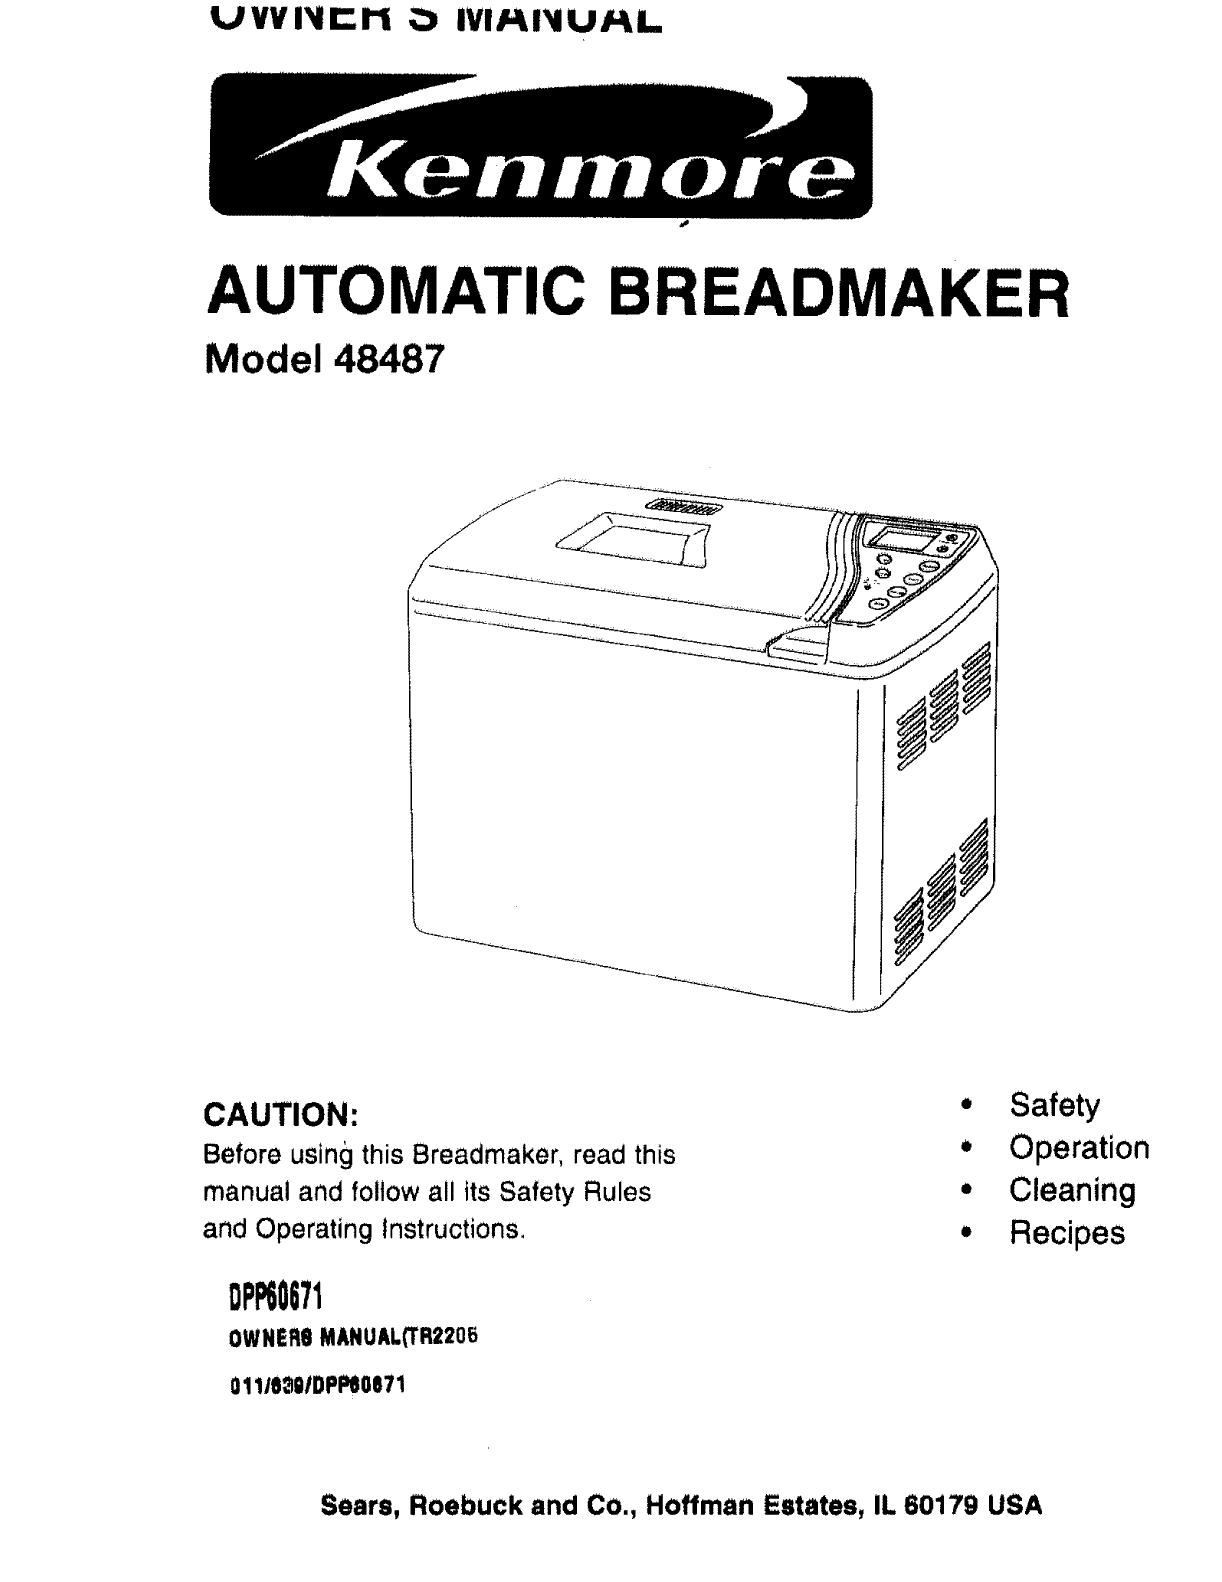 bread machine manual